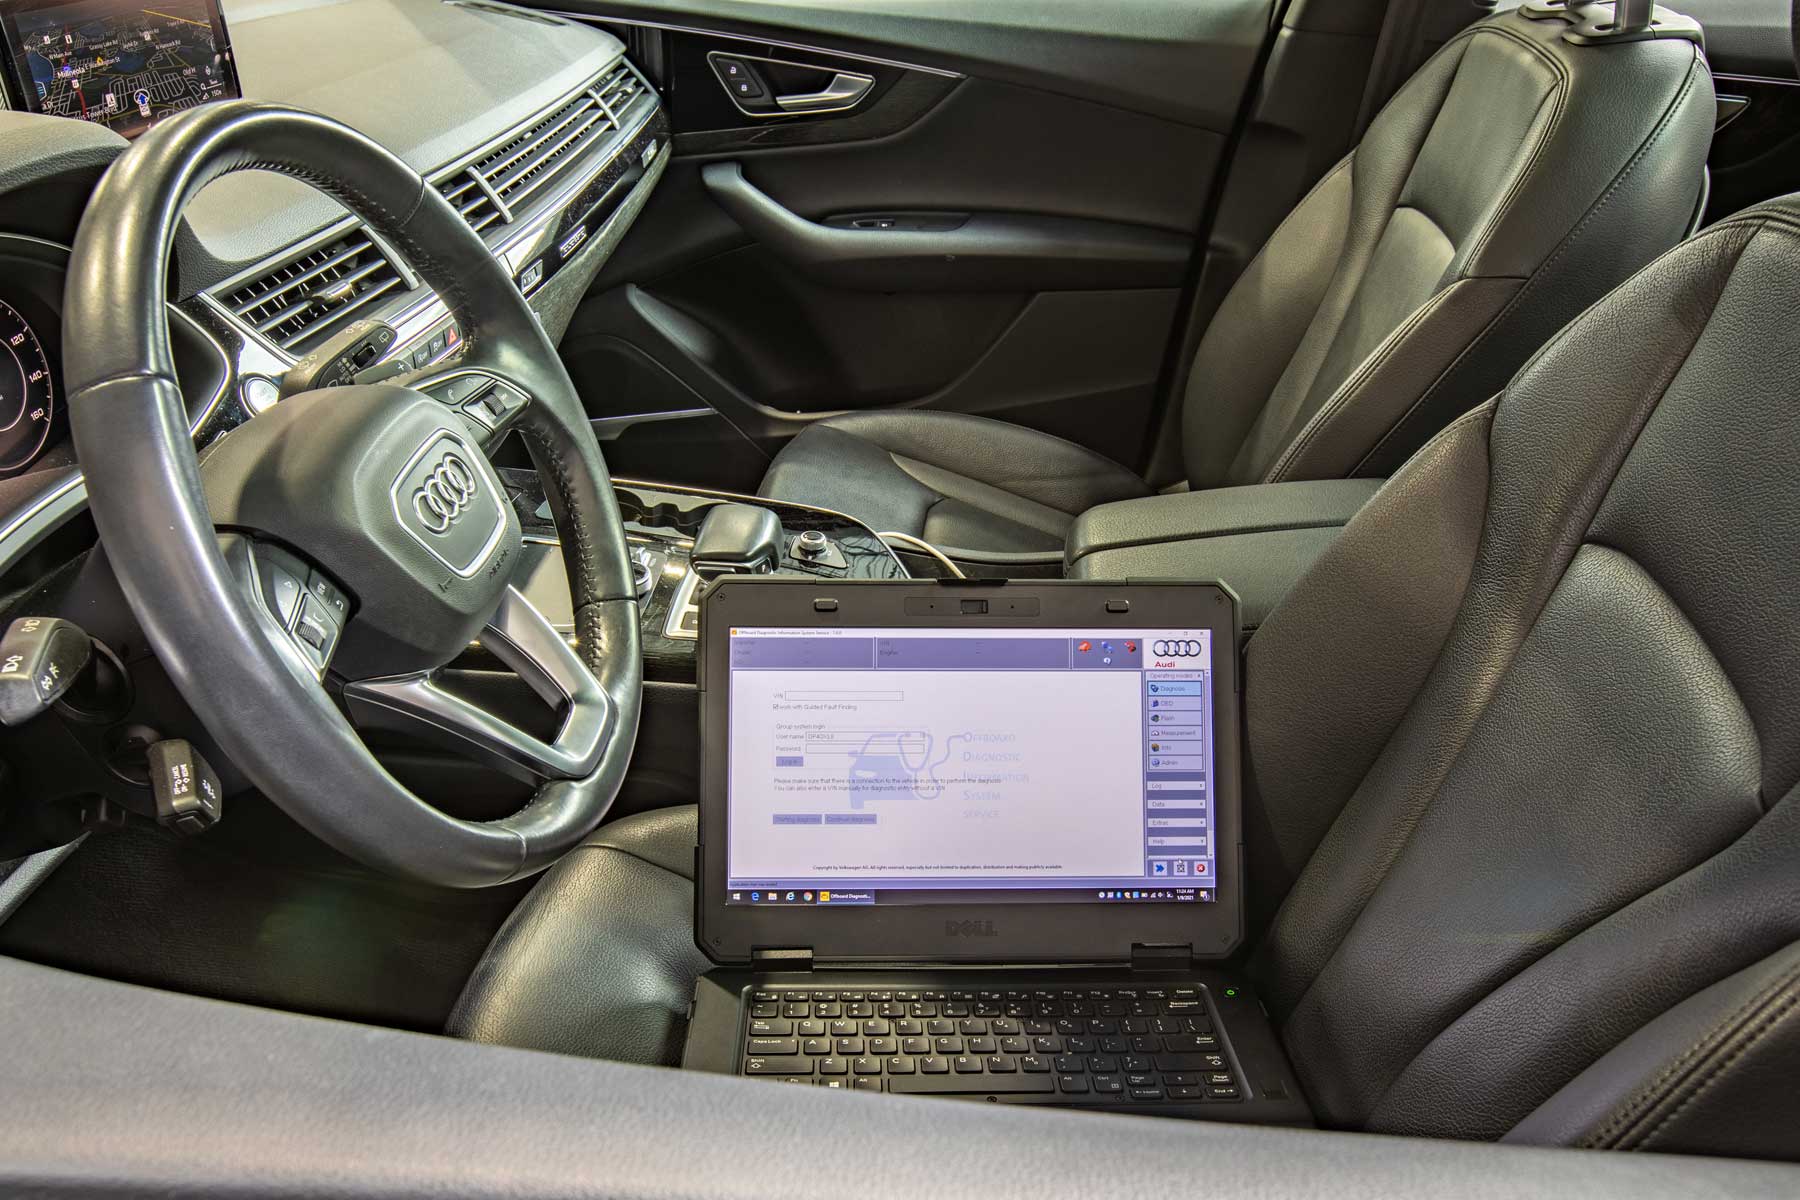 Computer check on a car